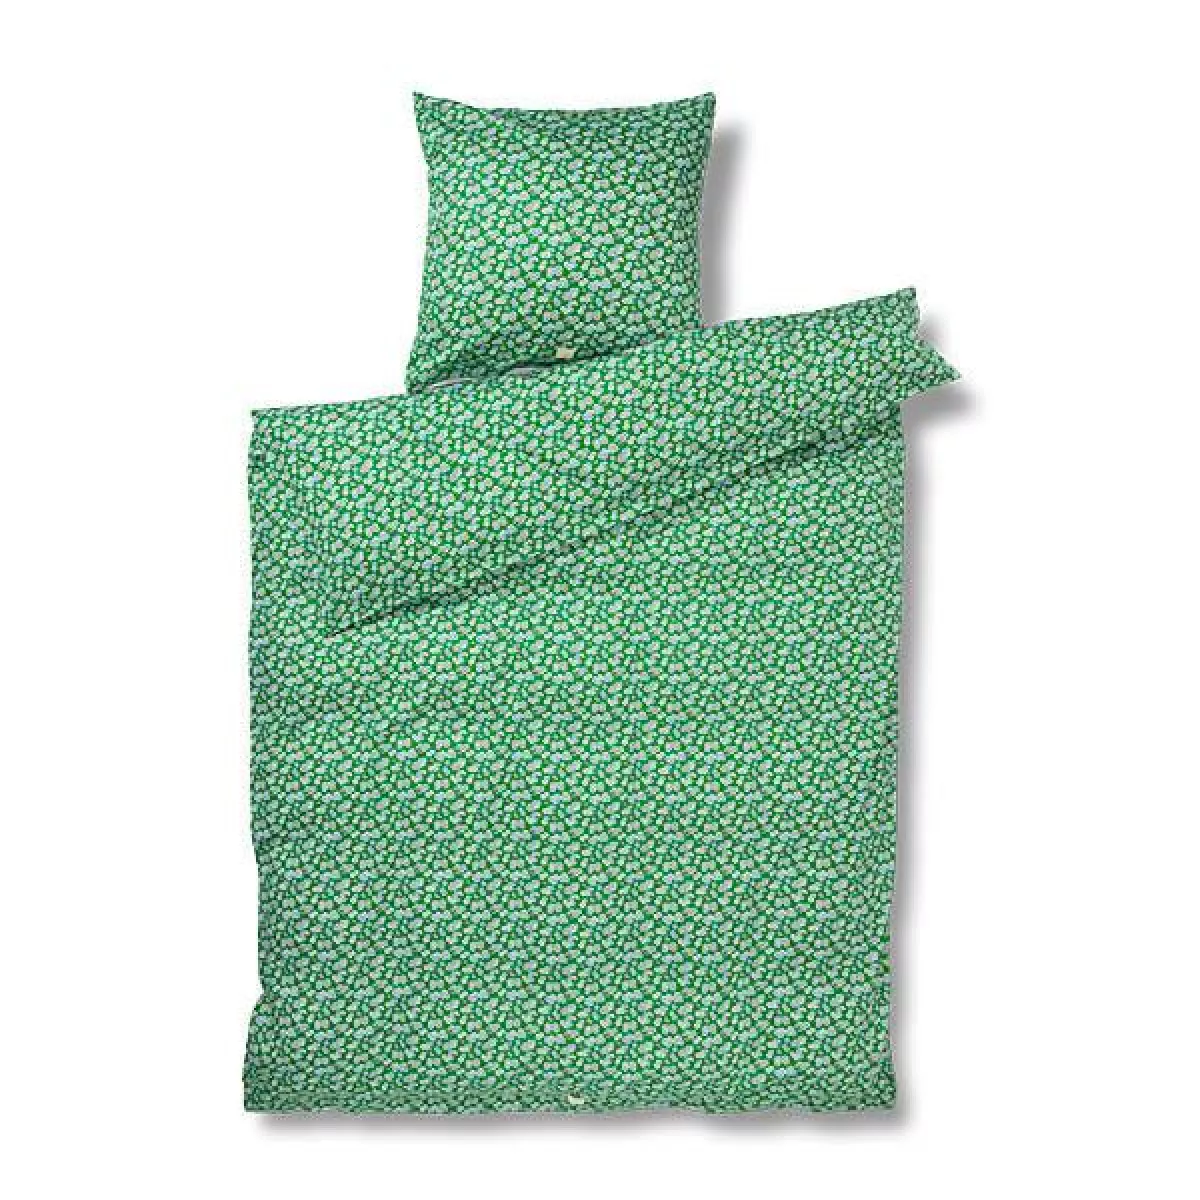 #2 - Juna Pleasantly sengetøj - Grøn